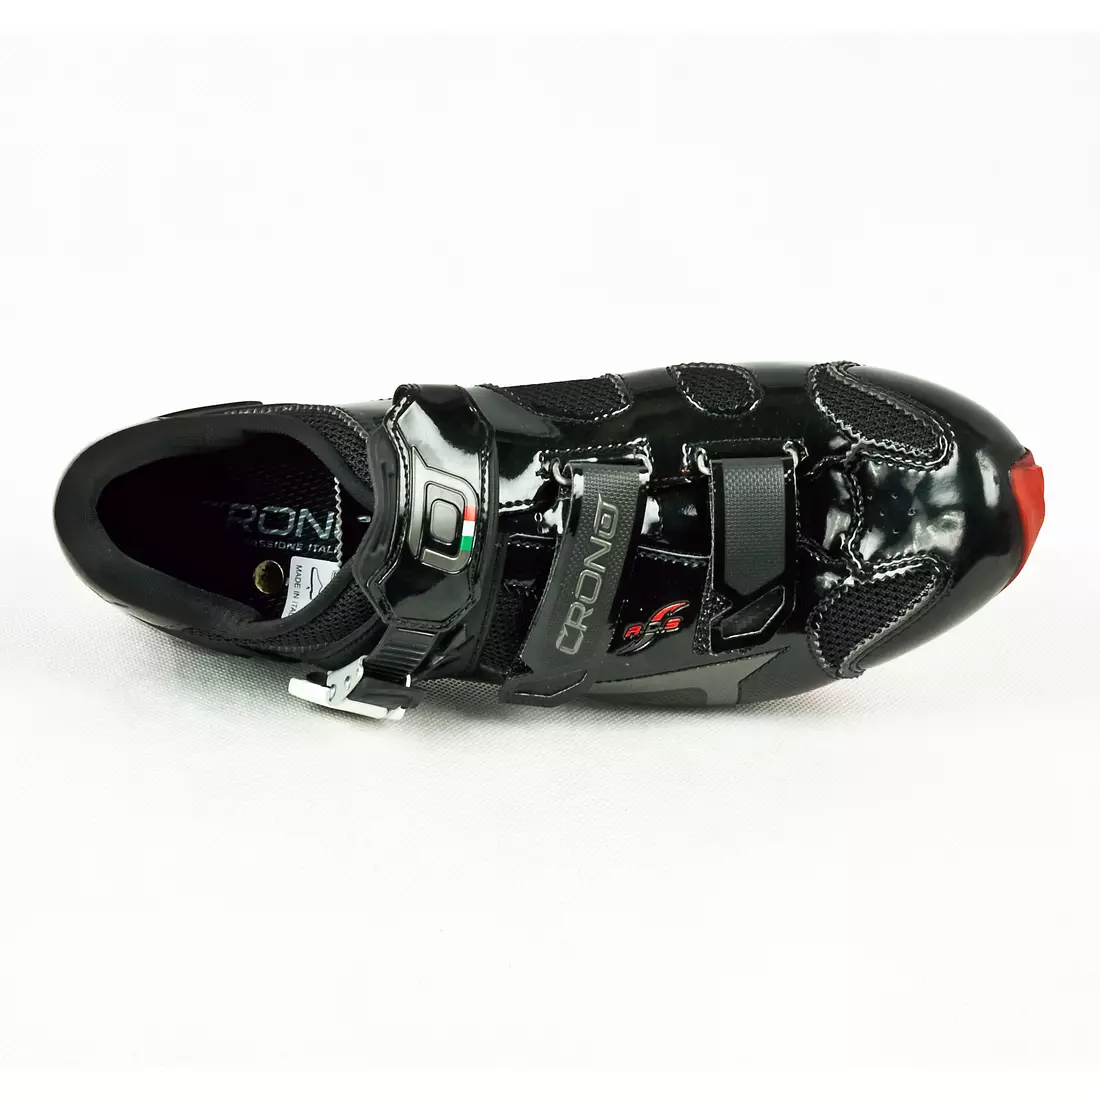 CRONO TRACK - MTB cyklistické boty - barva: Černá